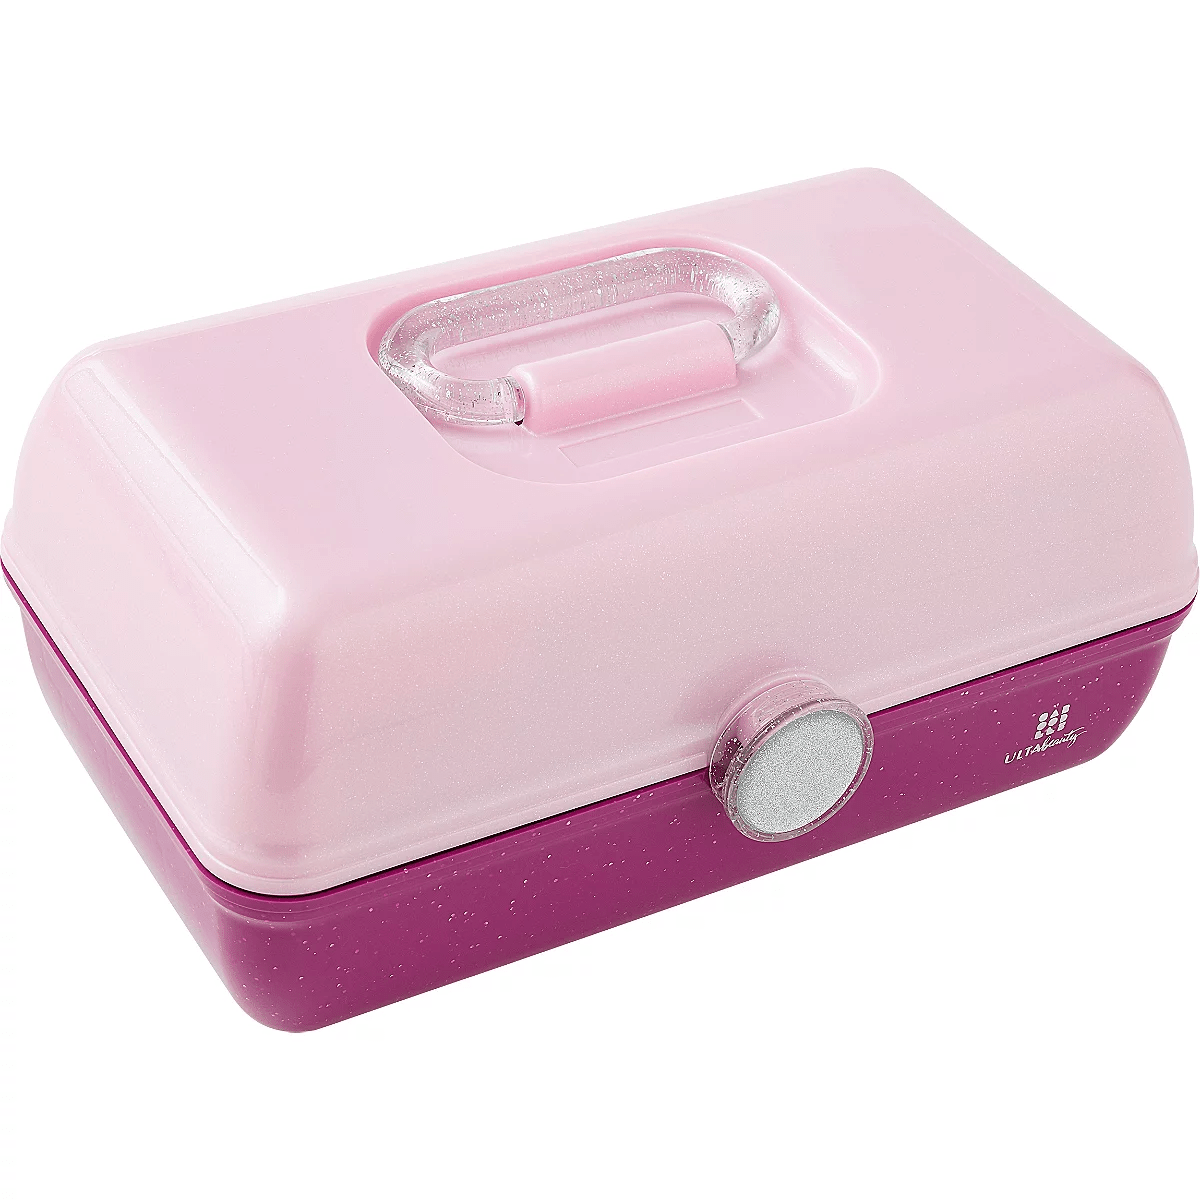  Ulta Beauty. Beauty Box: Caboodles Edition Pink